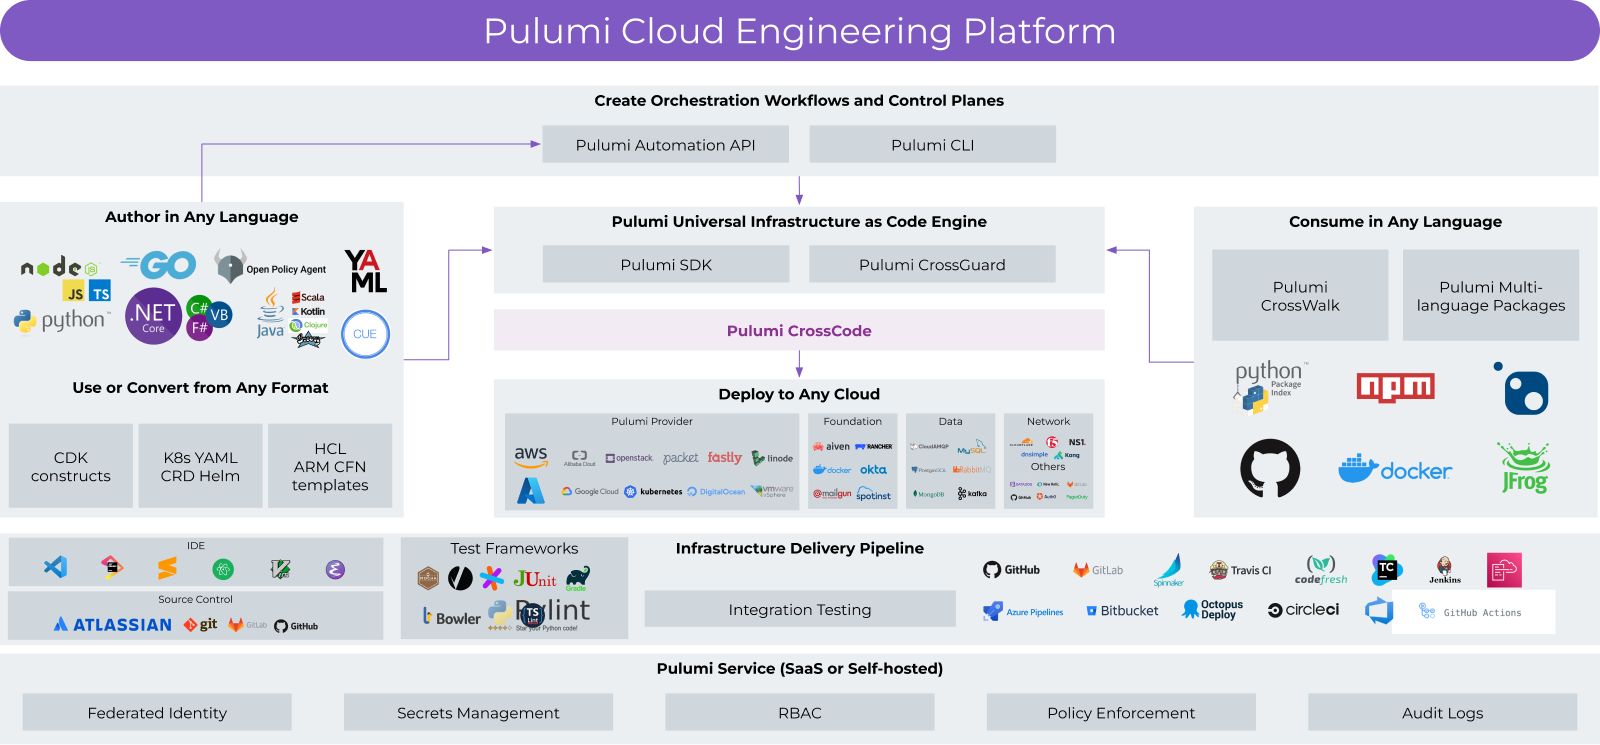 Pulumi Cloud Engineering Platform